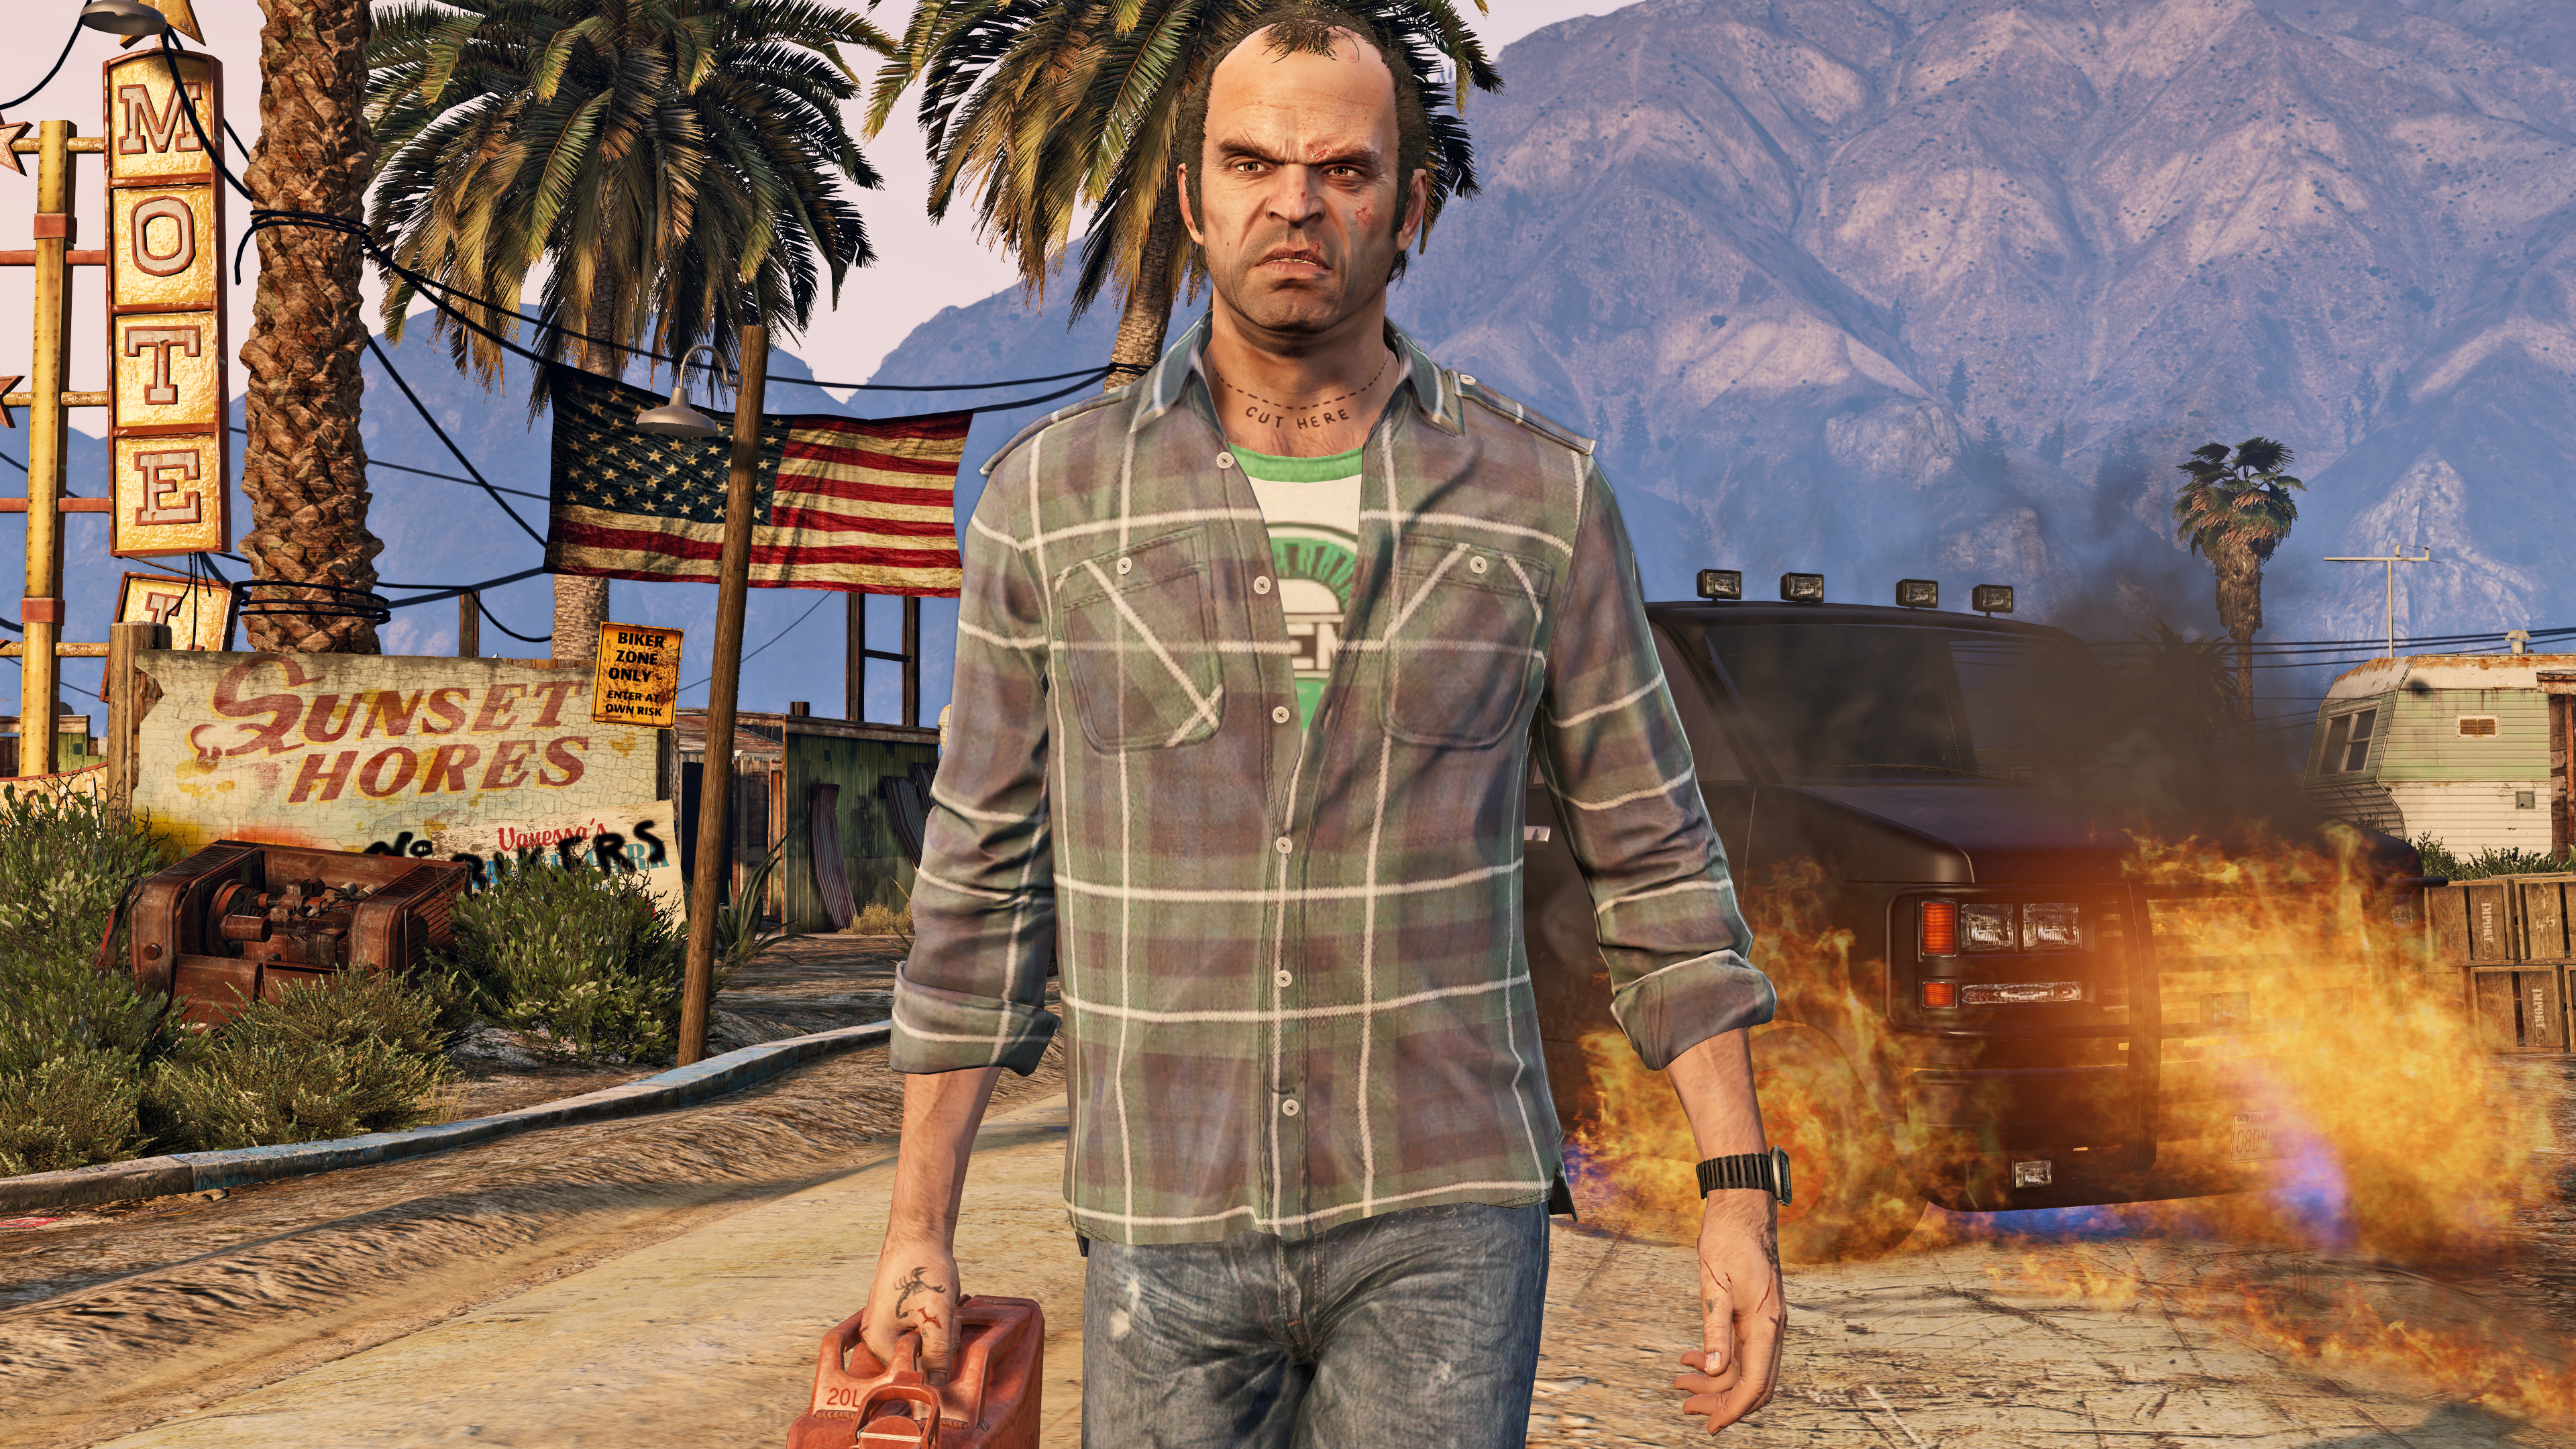 Grand Theft Auto 6 custa dinheiro à sorte! - Leak